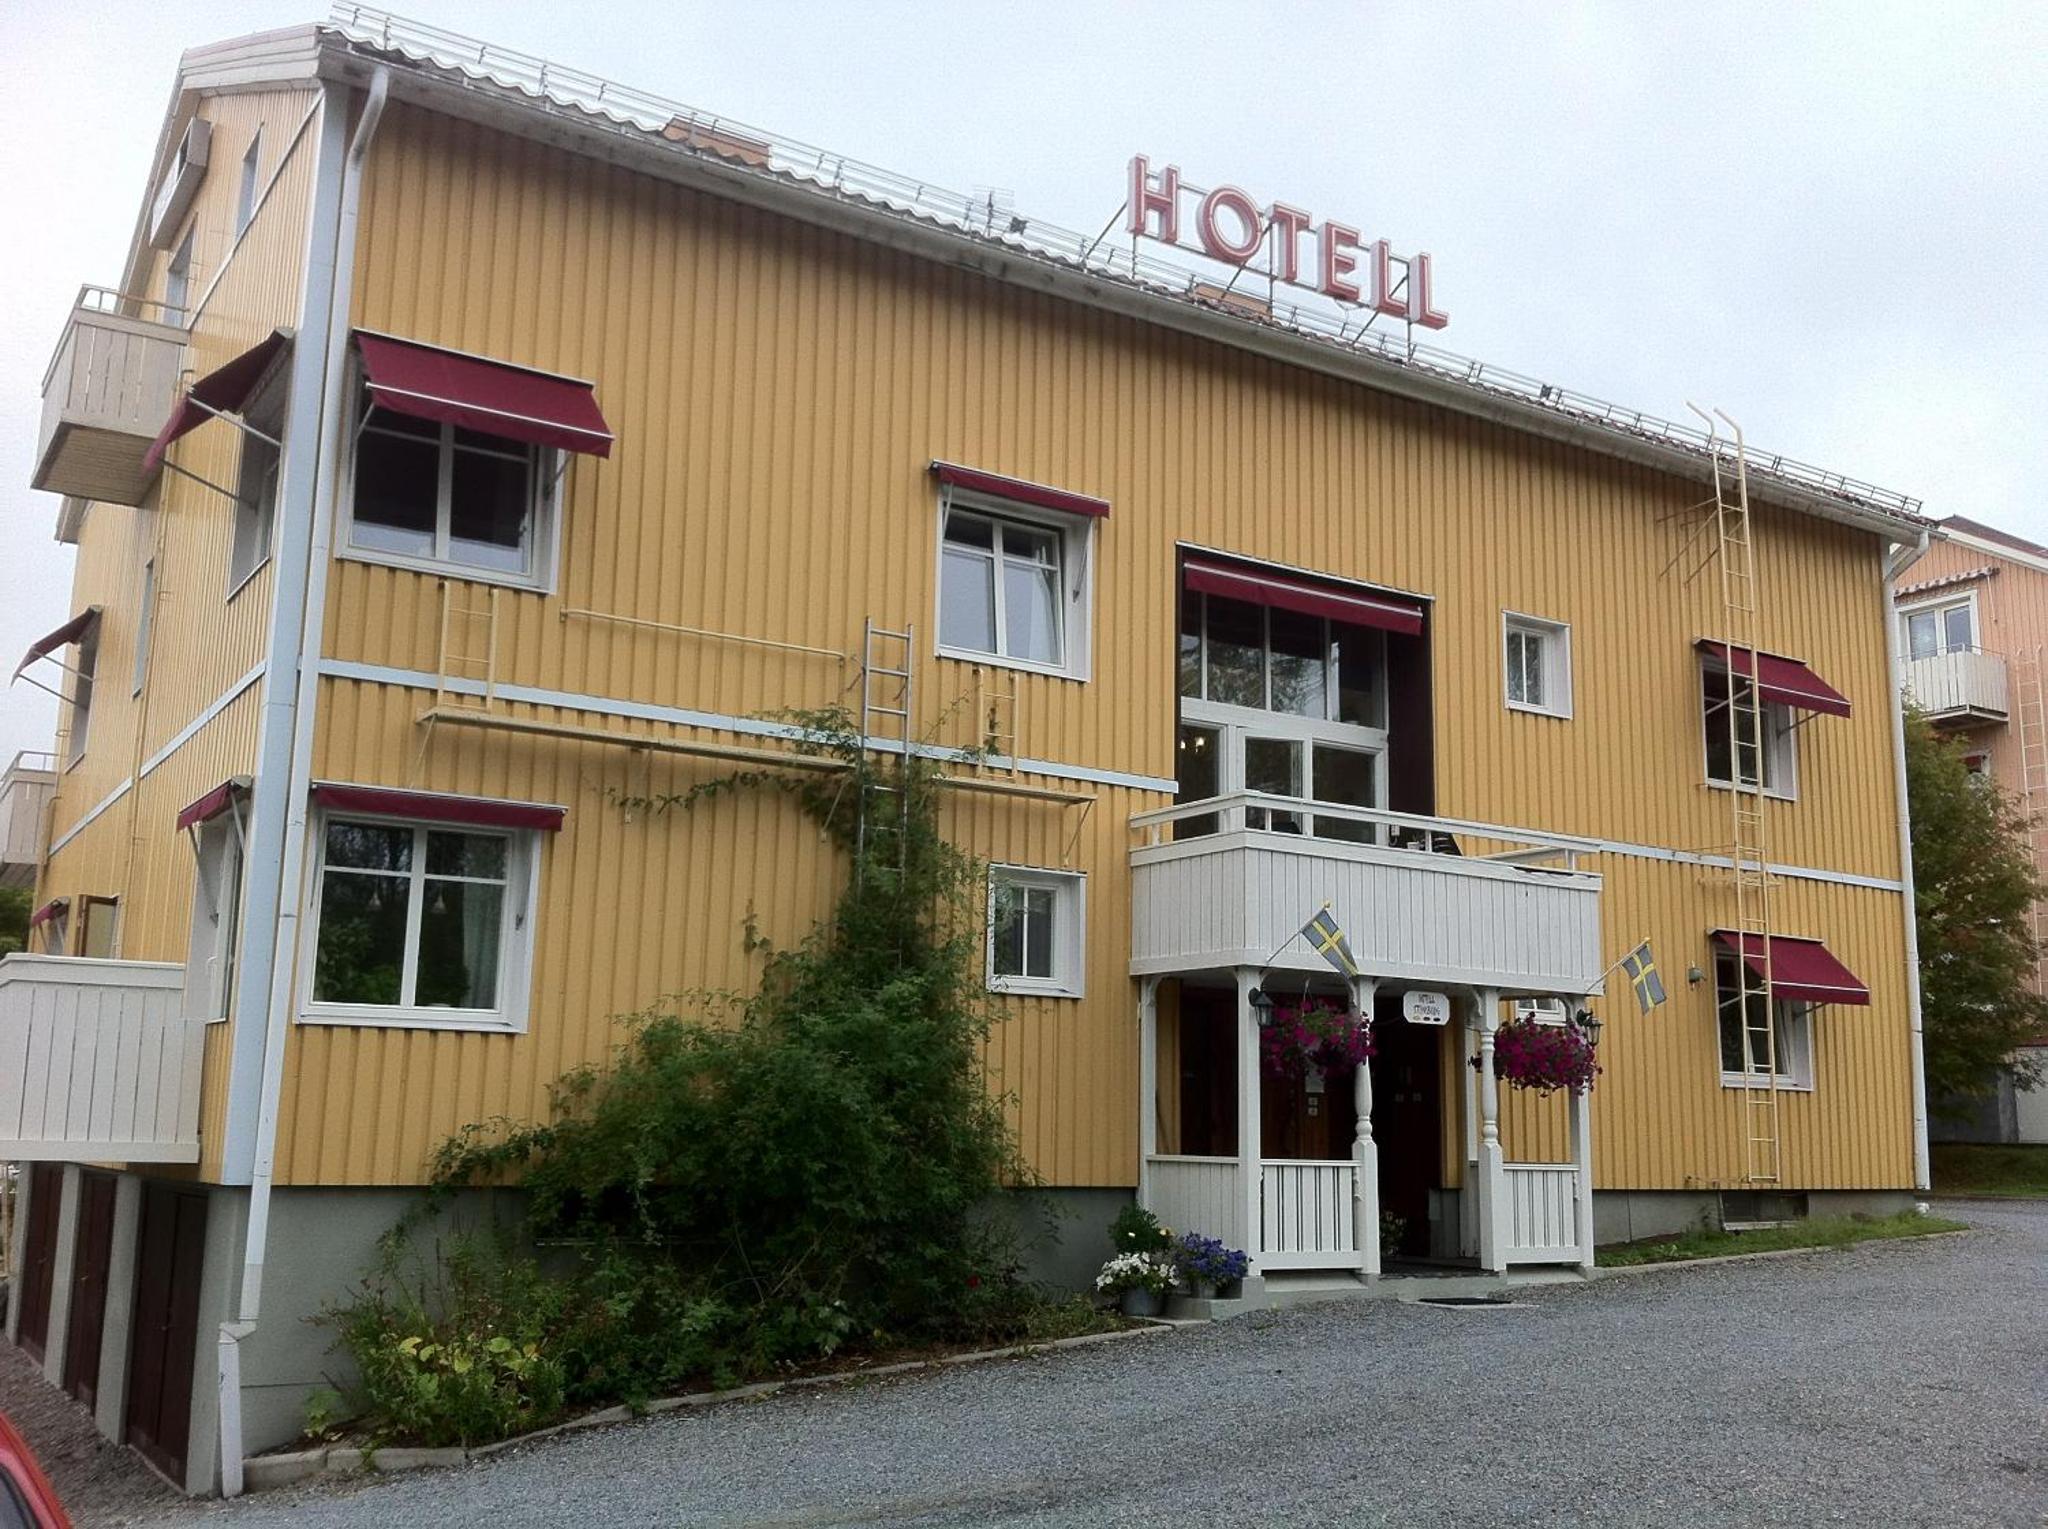 Hotel Stensborg